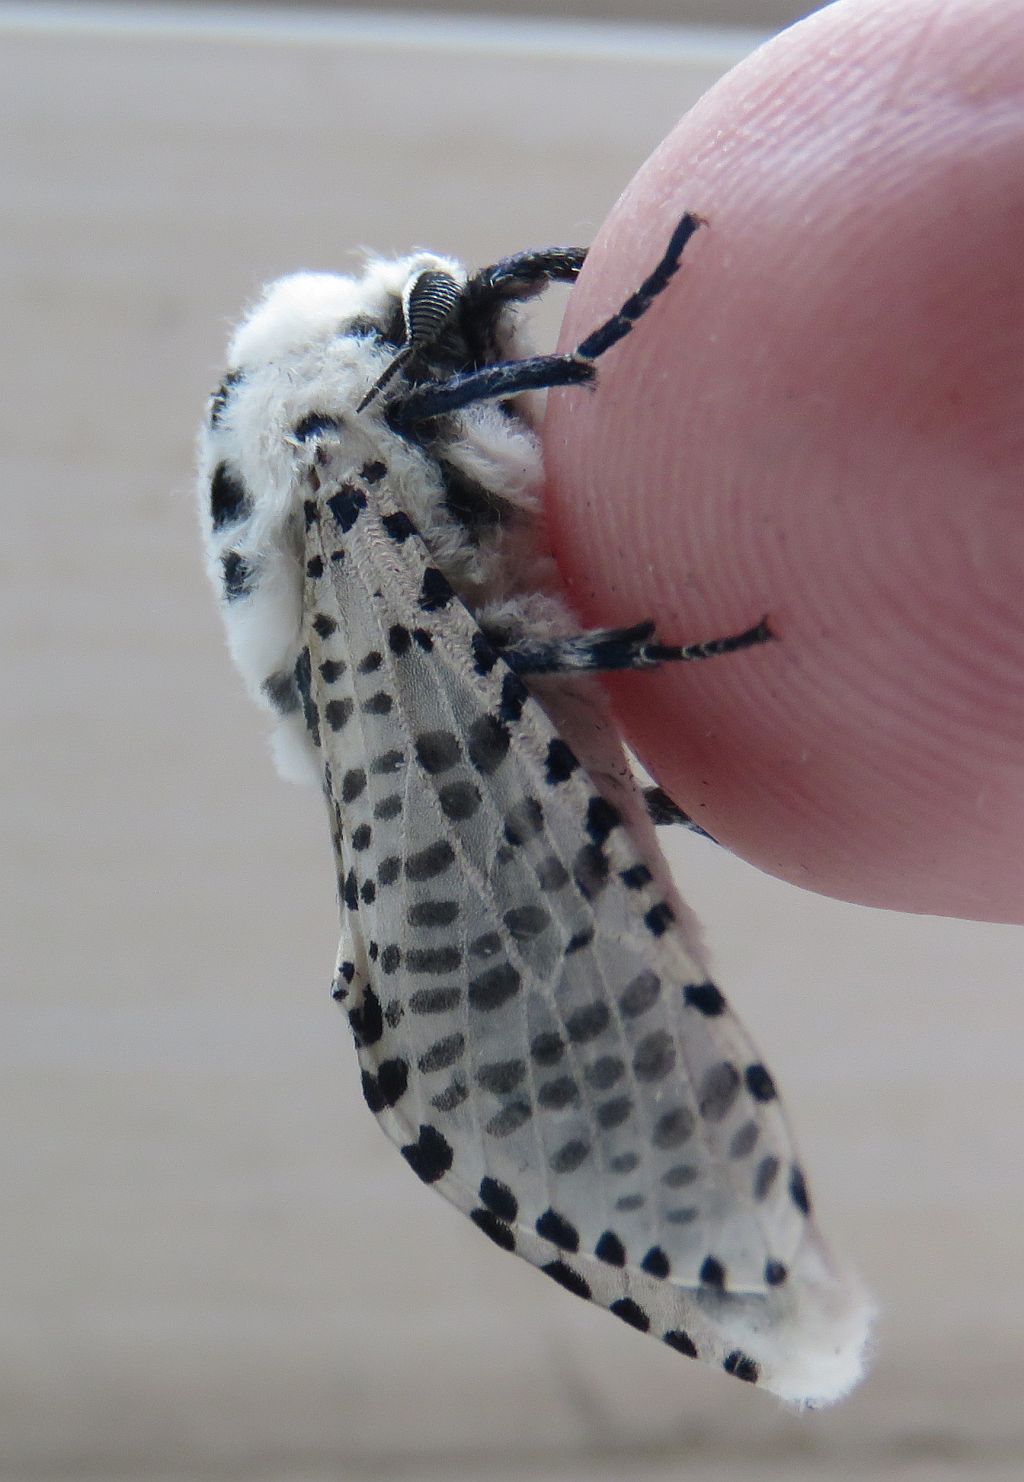   Leopard Moth  